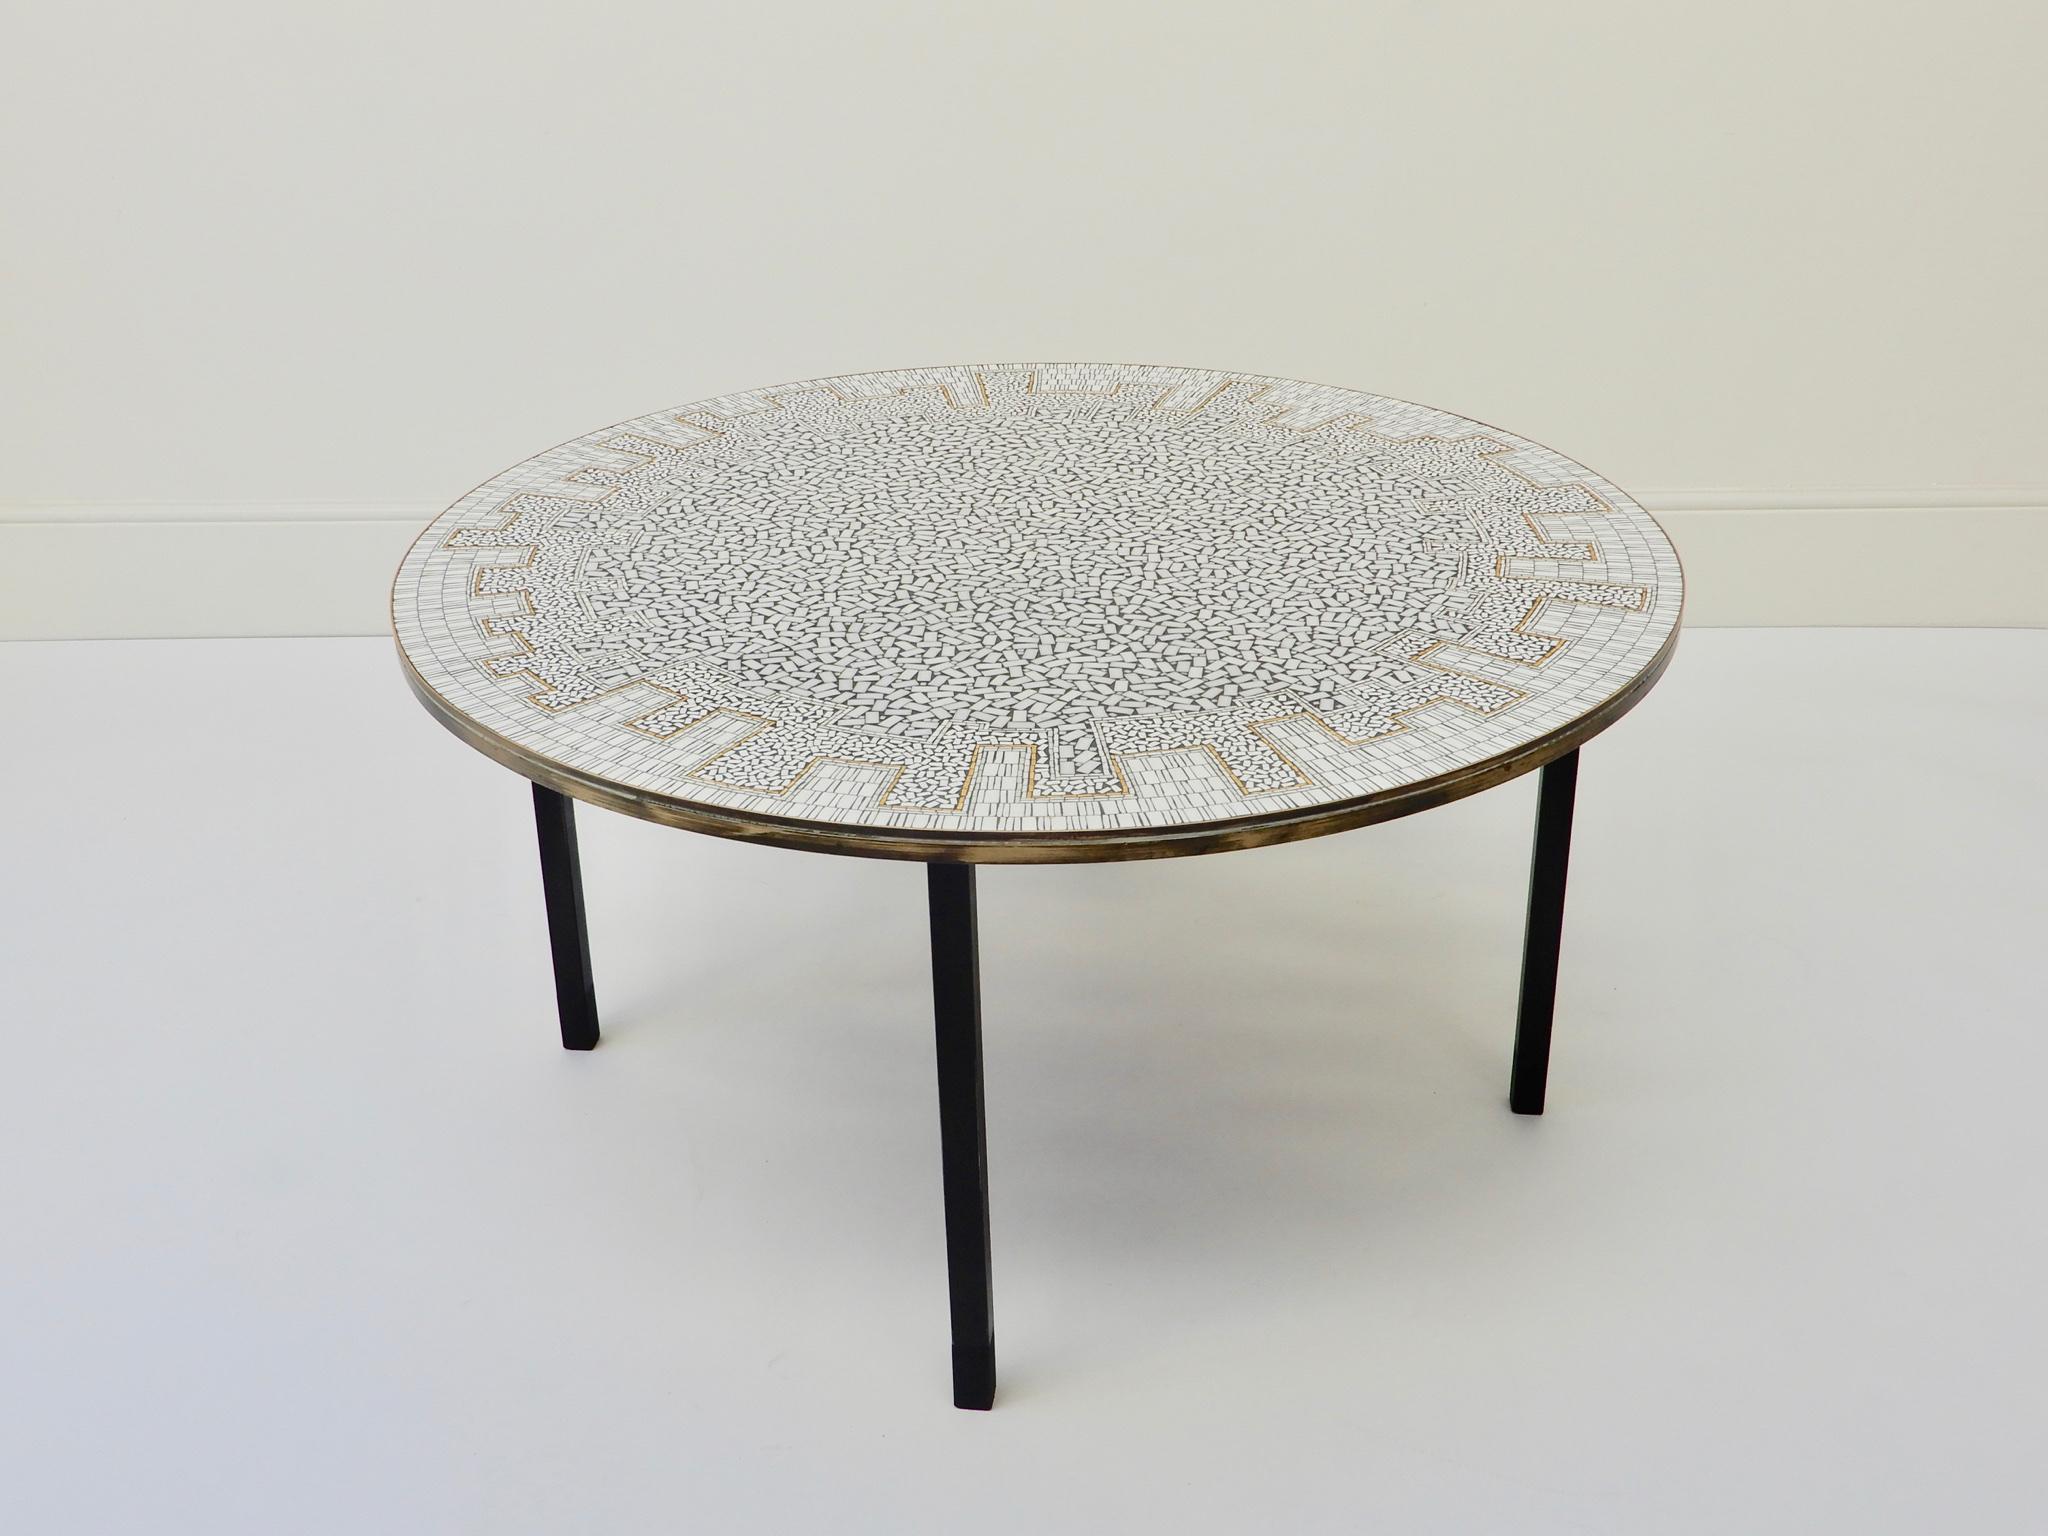 Circular German ceramic tiled coffee table with metal base, 1960s.
      